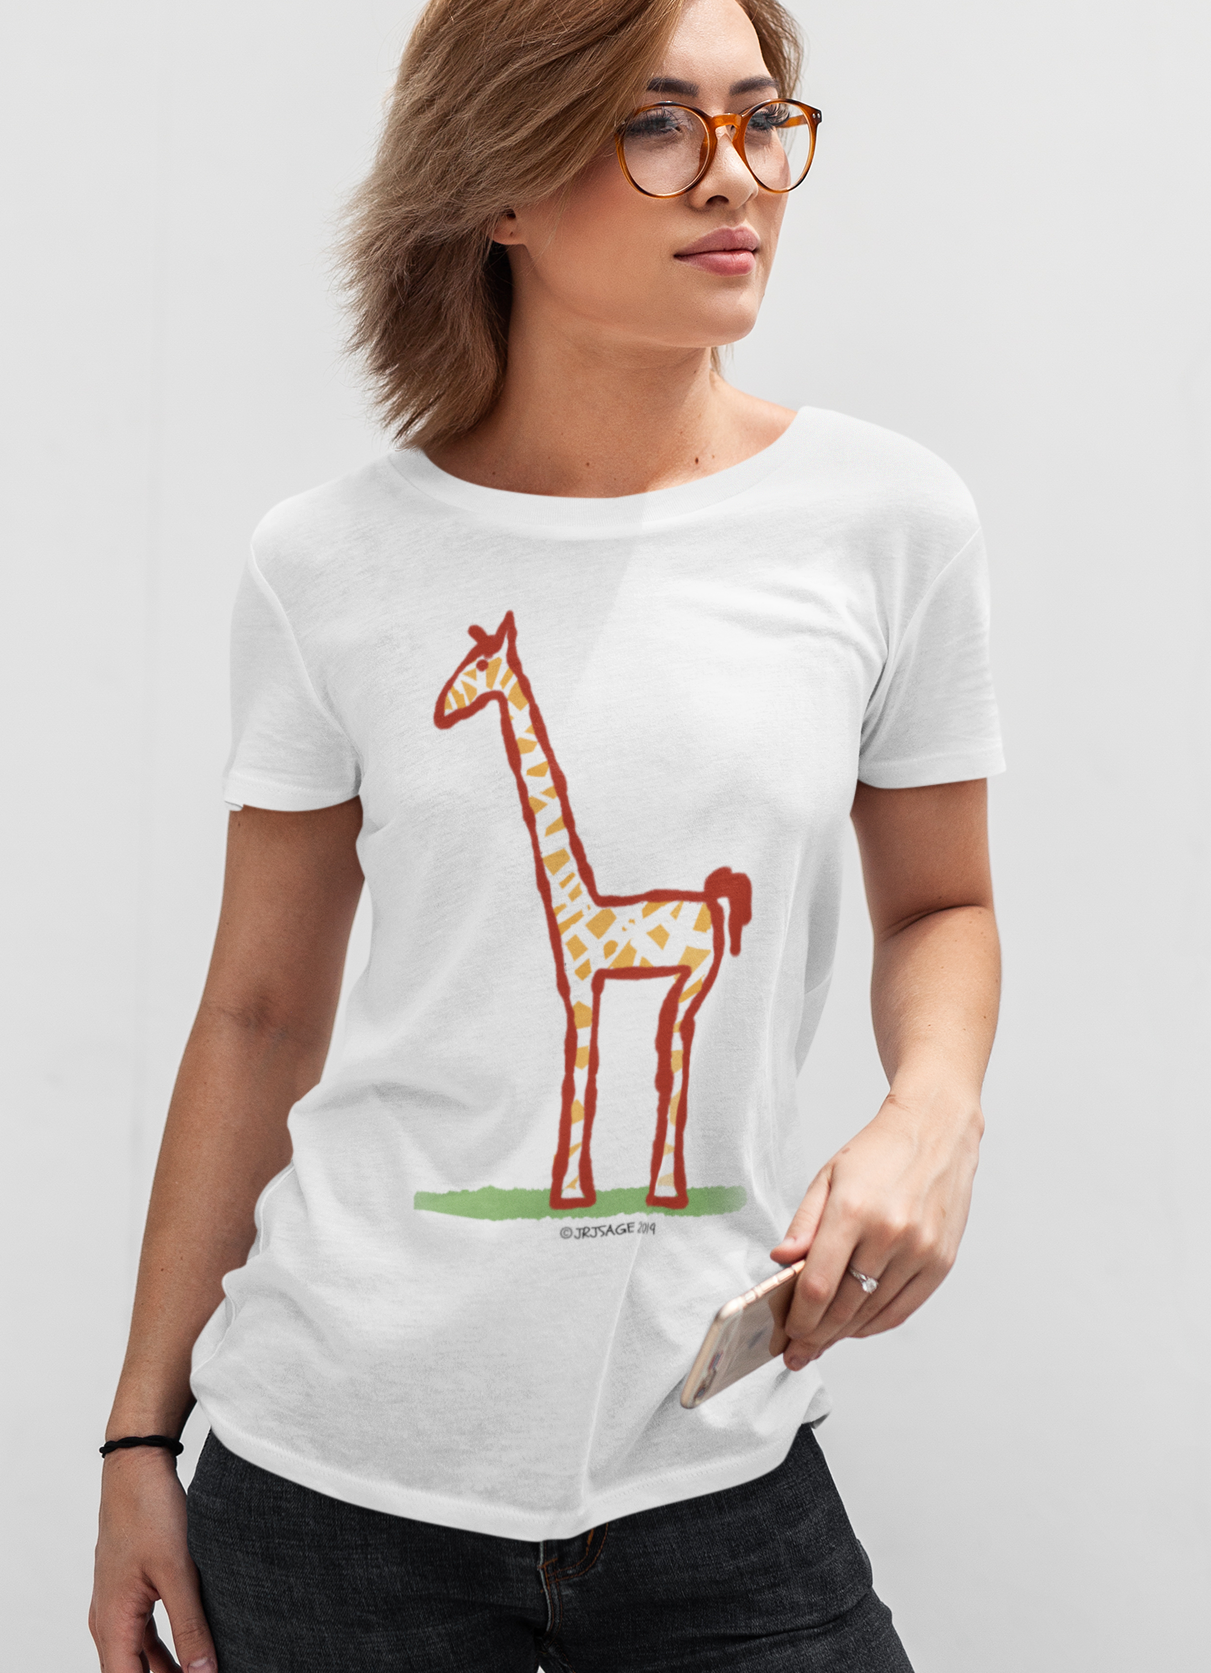 Young woman wearing a Giraffe t-shirt - Illustrated Jeffrey Giraffe vegan cotton t-shirts by Hector and Bone